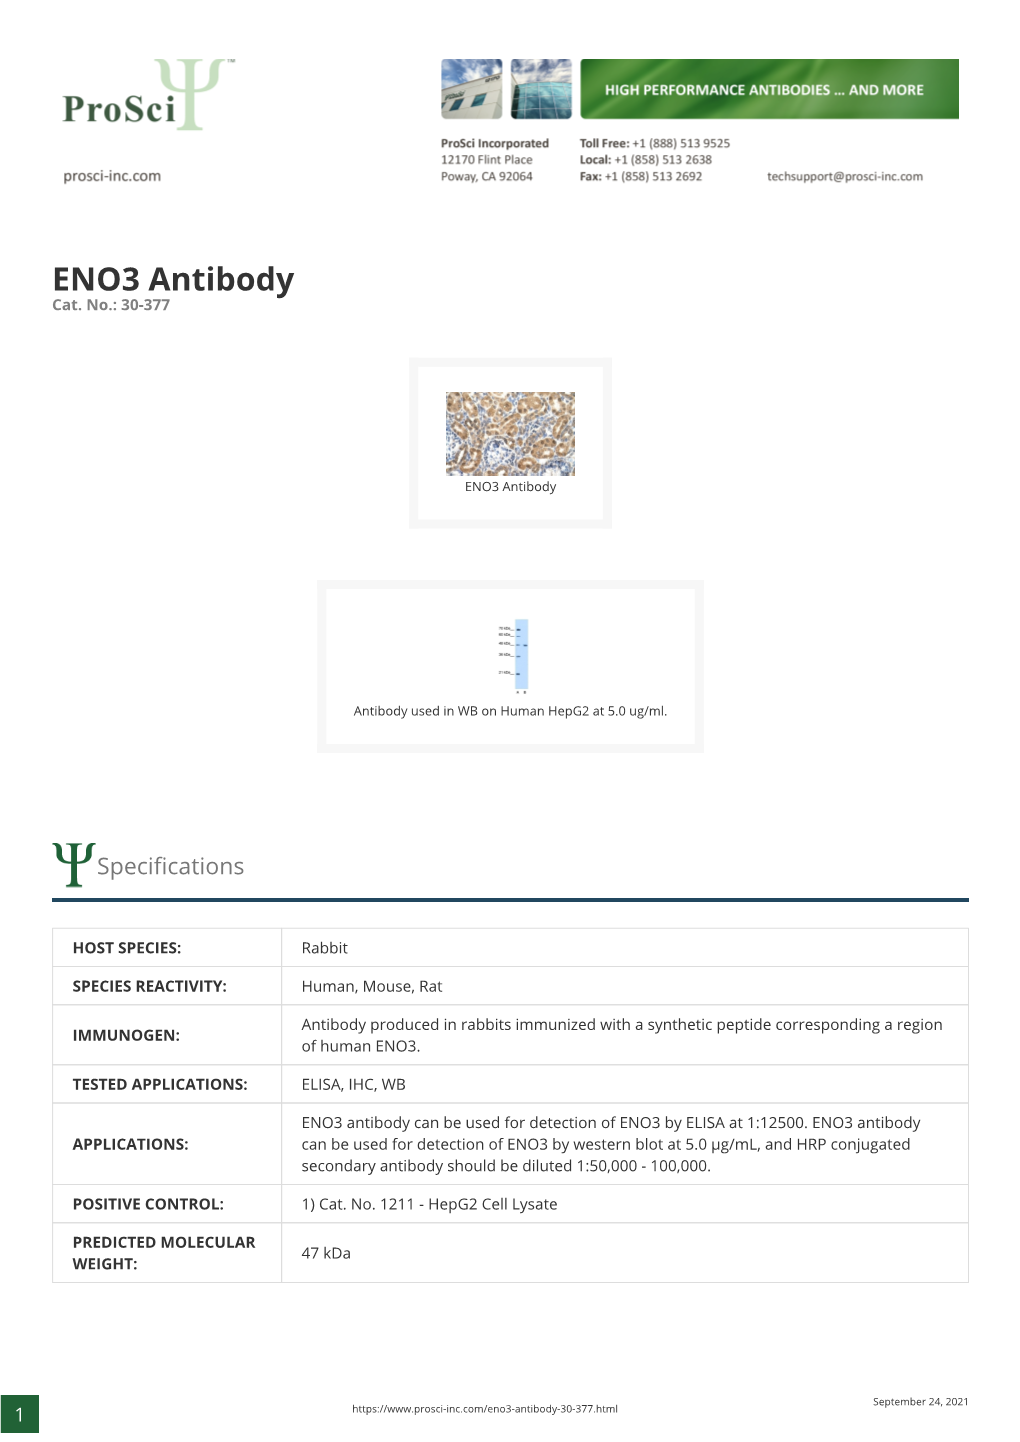 ENO3 Antibody Cat